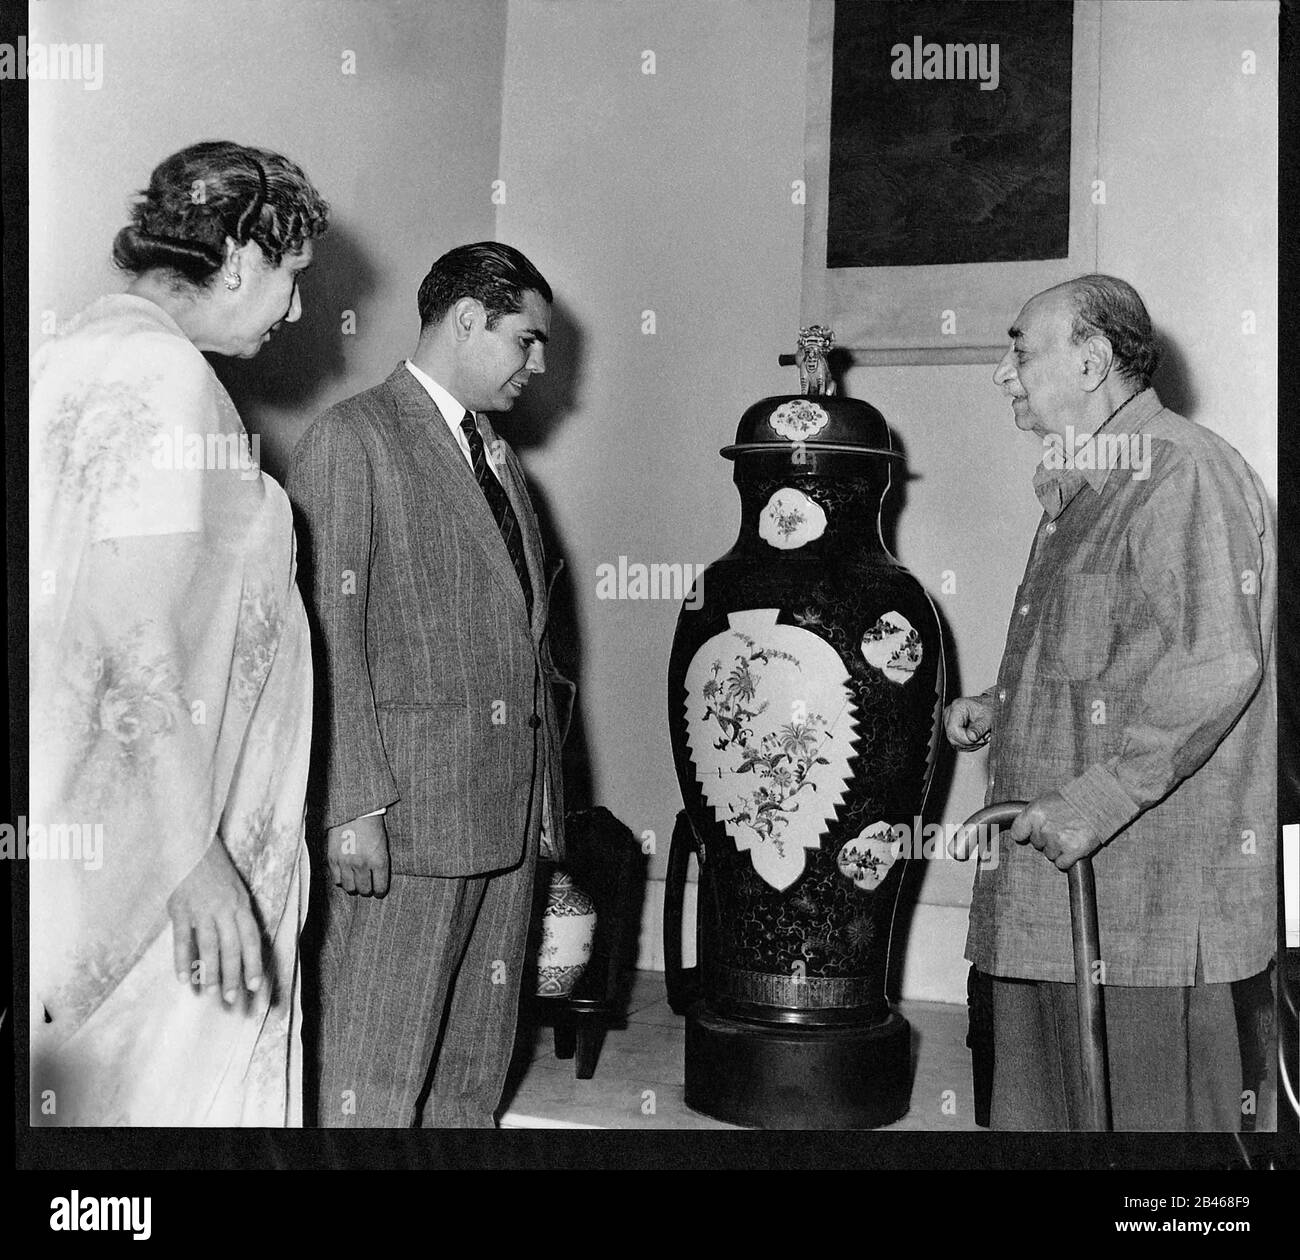 Sir Cobasji Jehangir, 2e baronet, GBE, KCIE, et Lady Cobasji Jehangir, à la résidence, Bombay, Mumbai, Maharashtra, Inde, Asie, 1956, ancienne image du XXe siècle Banque D'Images